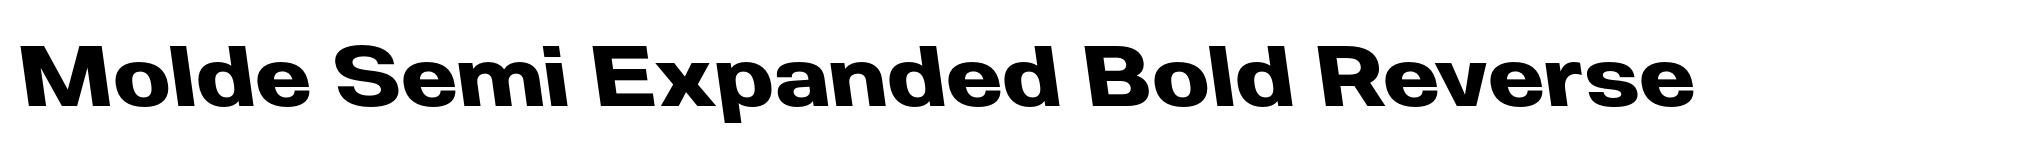 Molde Semi Expanded Bold Reverse image